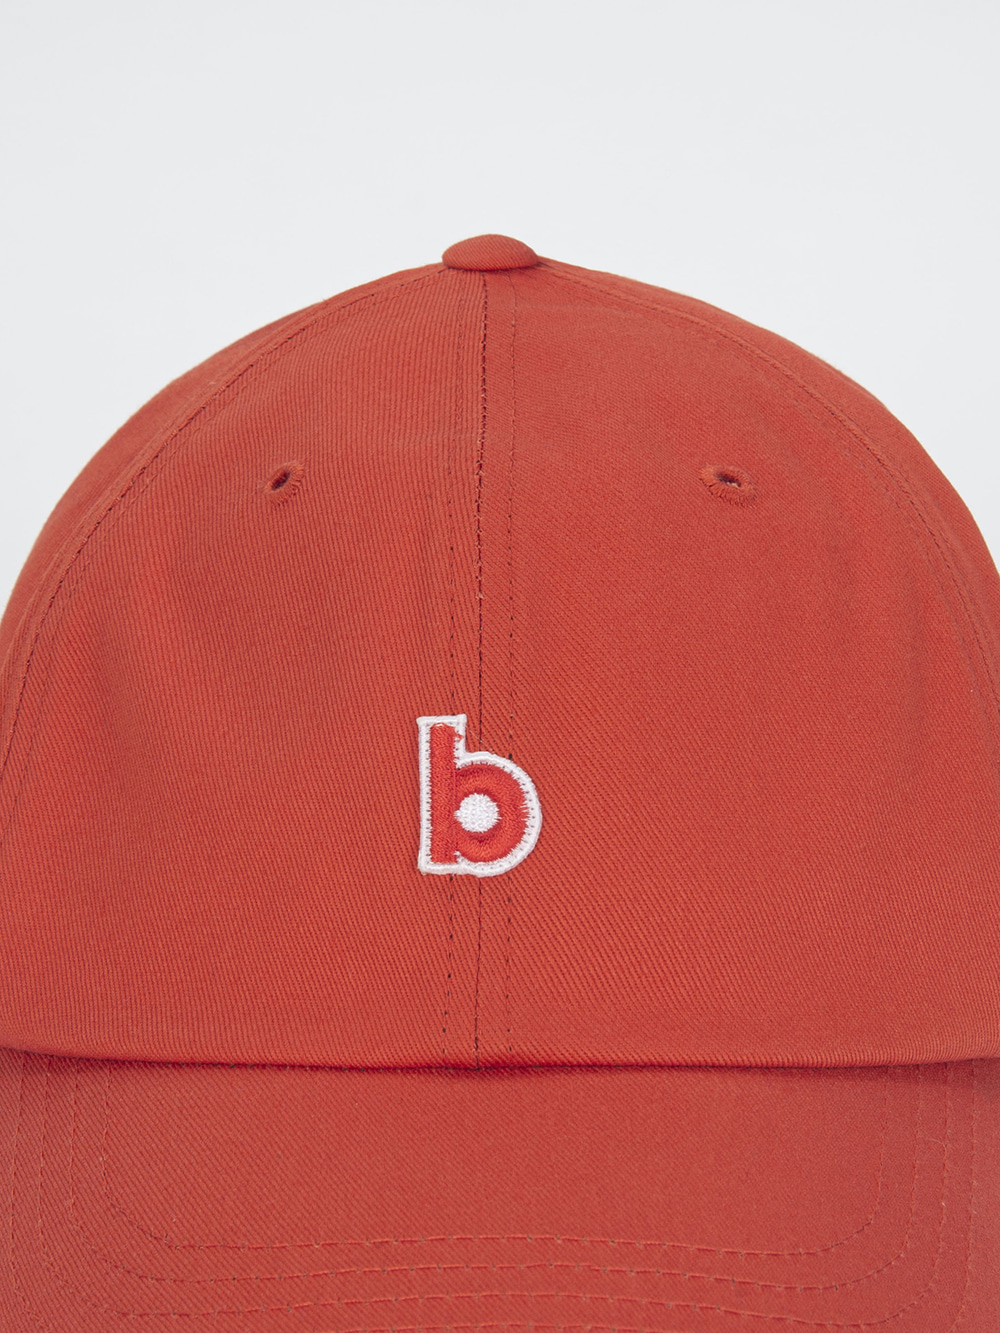 Billboard Global B logo Ball Cap_Red